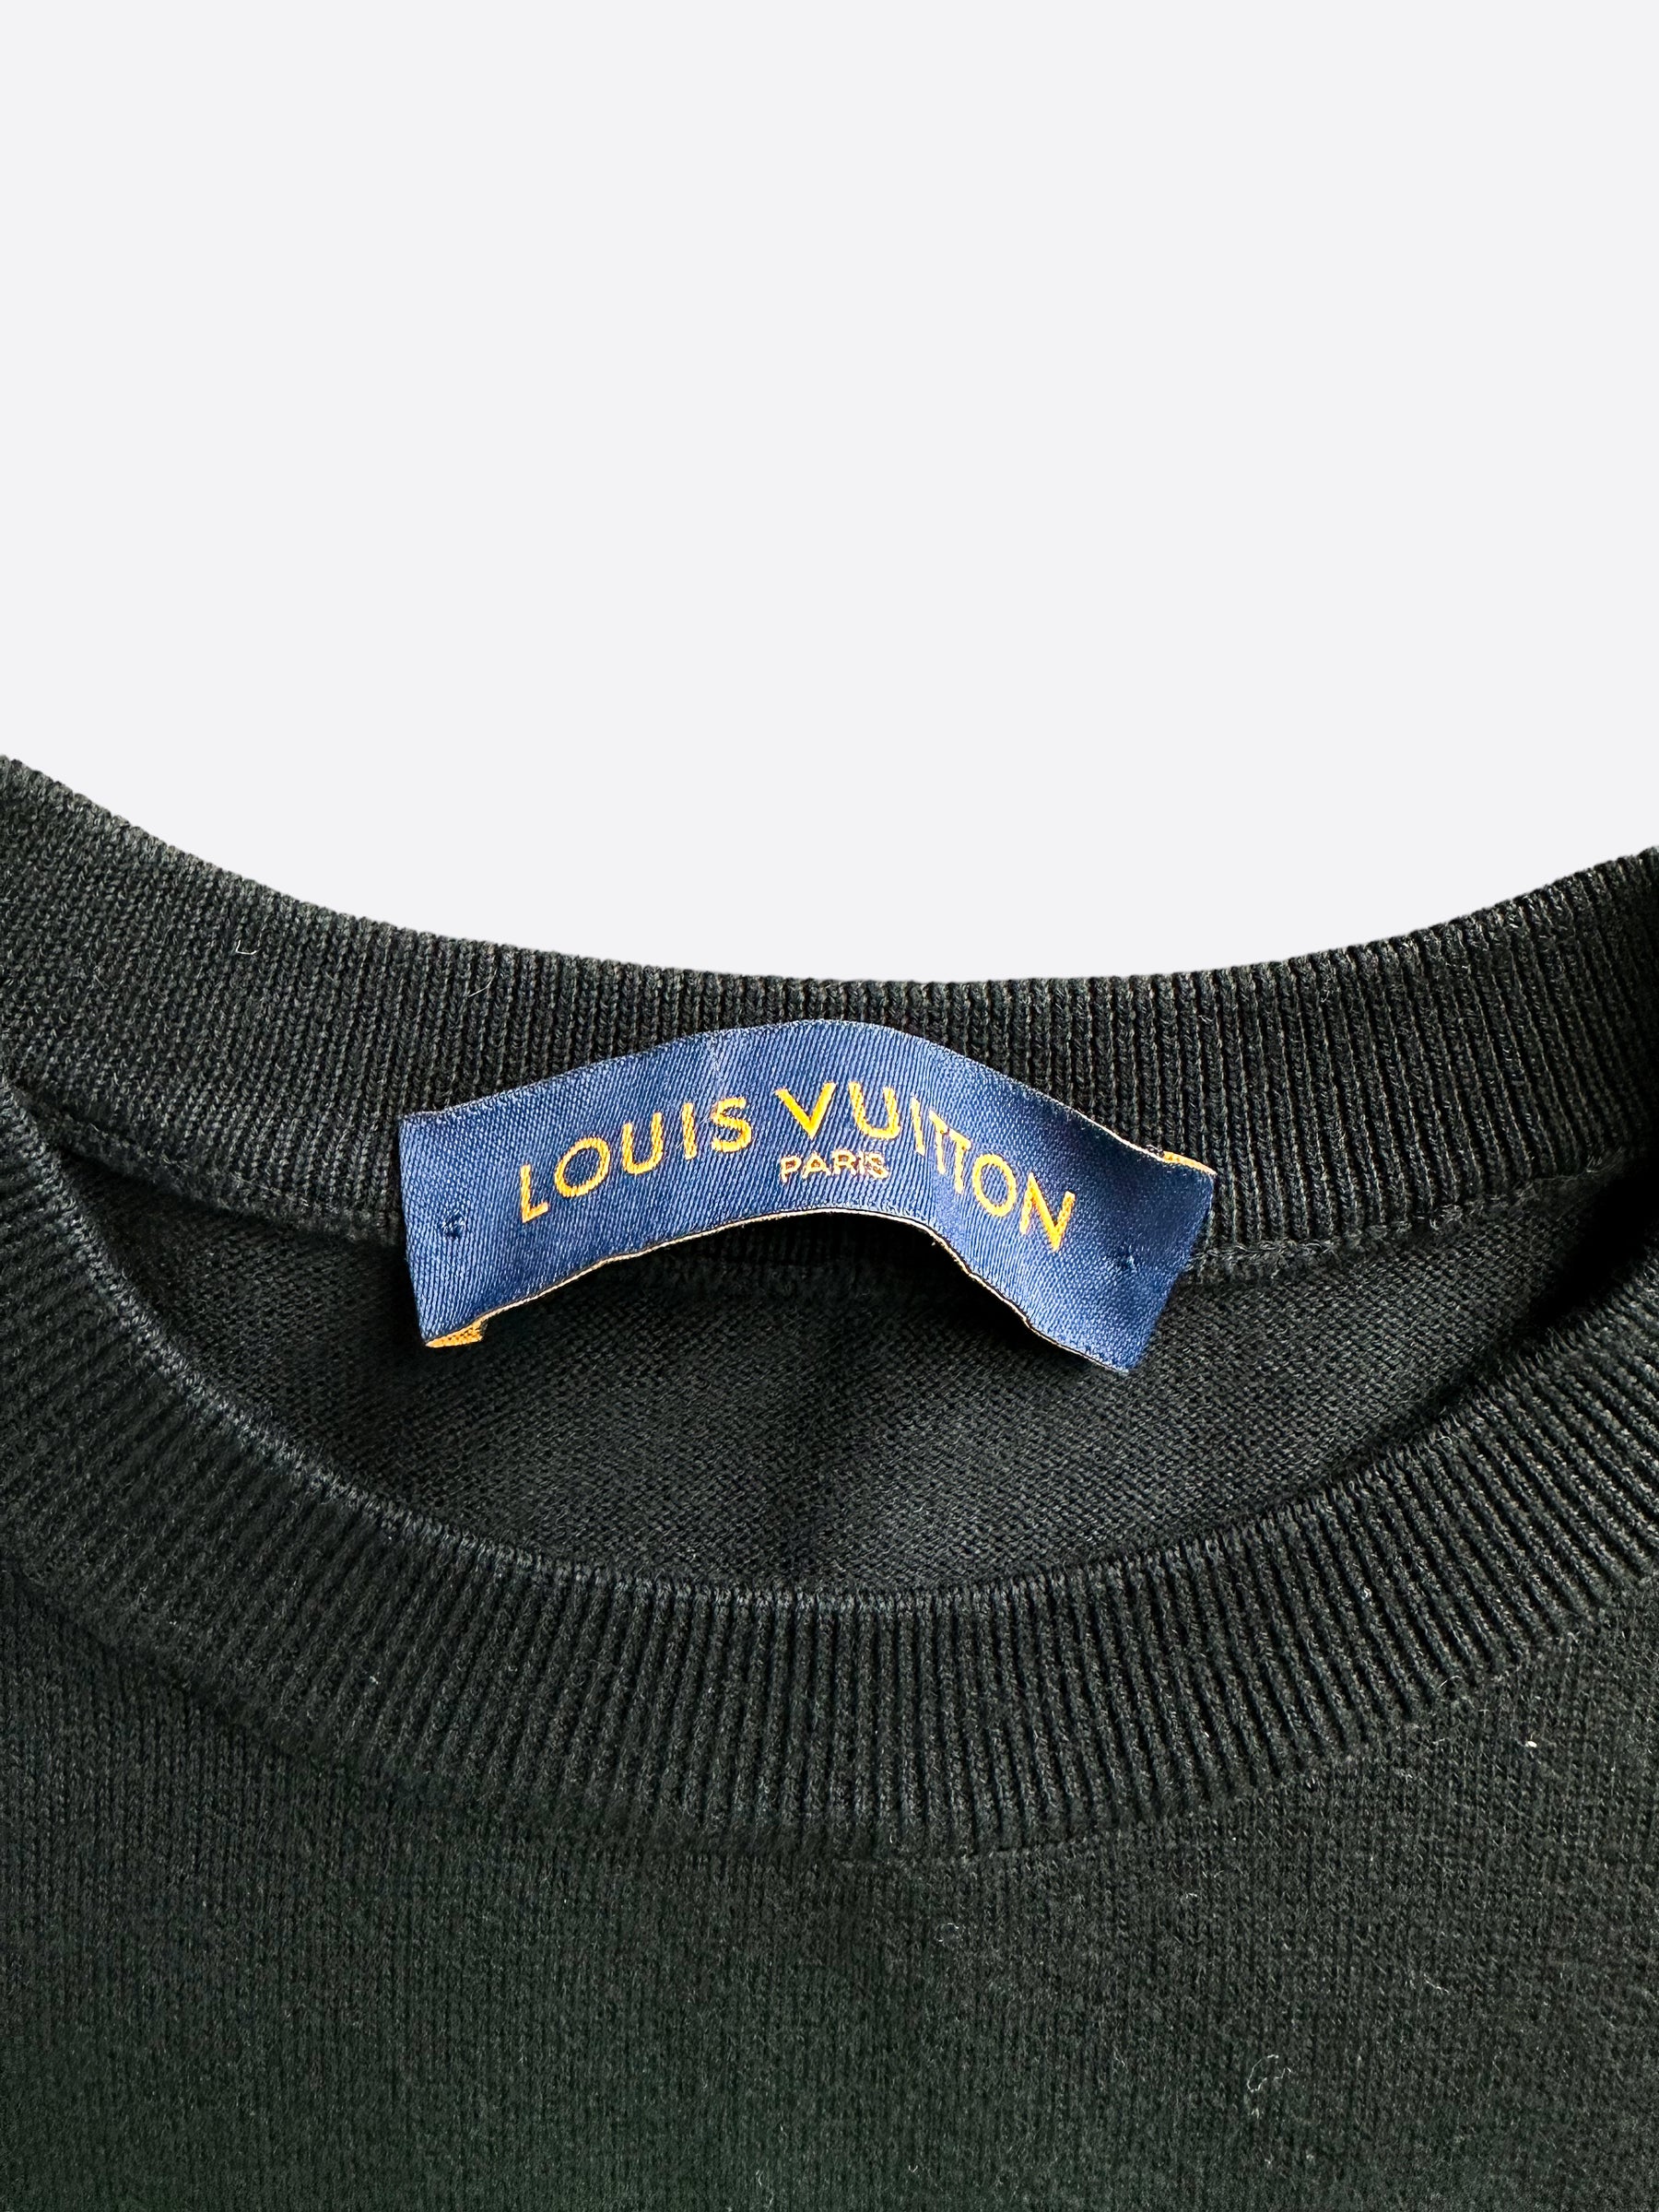 Louis Vuitton 1854 Graphic Knit T-Shirt Size Medium